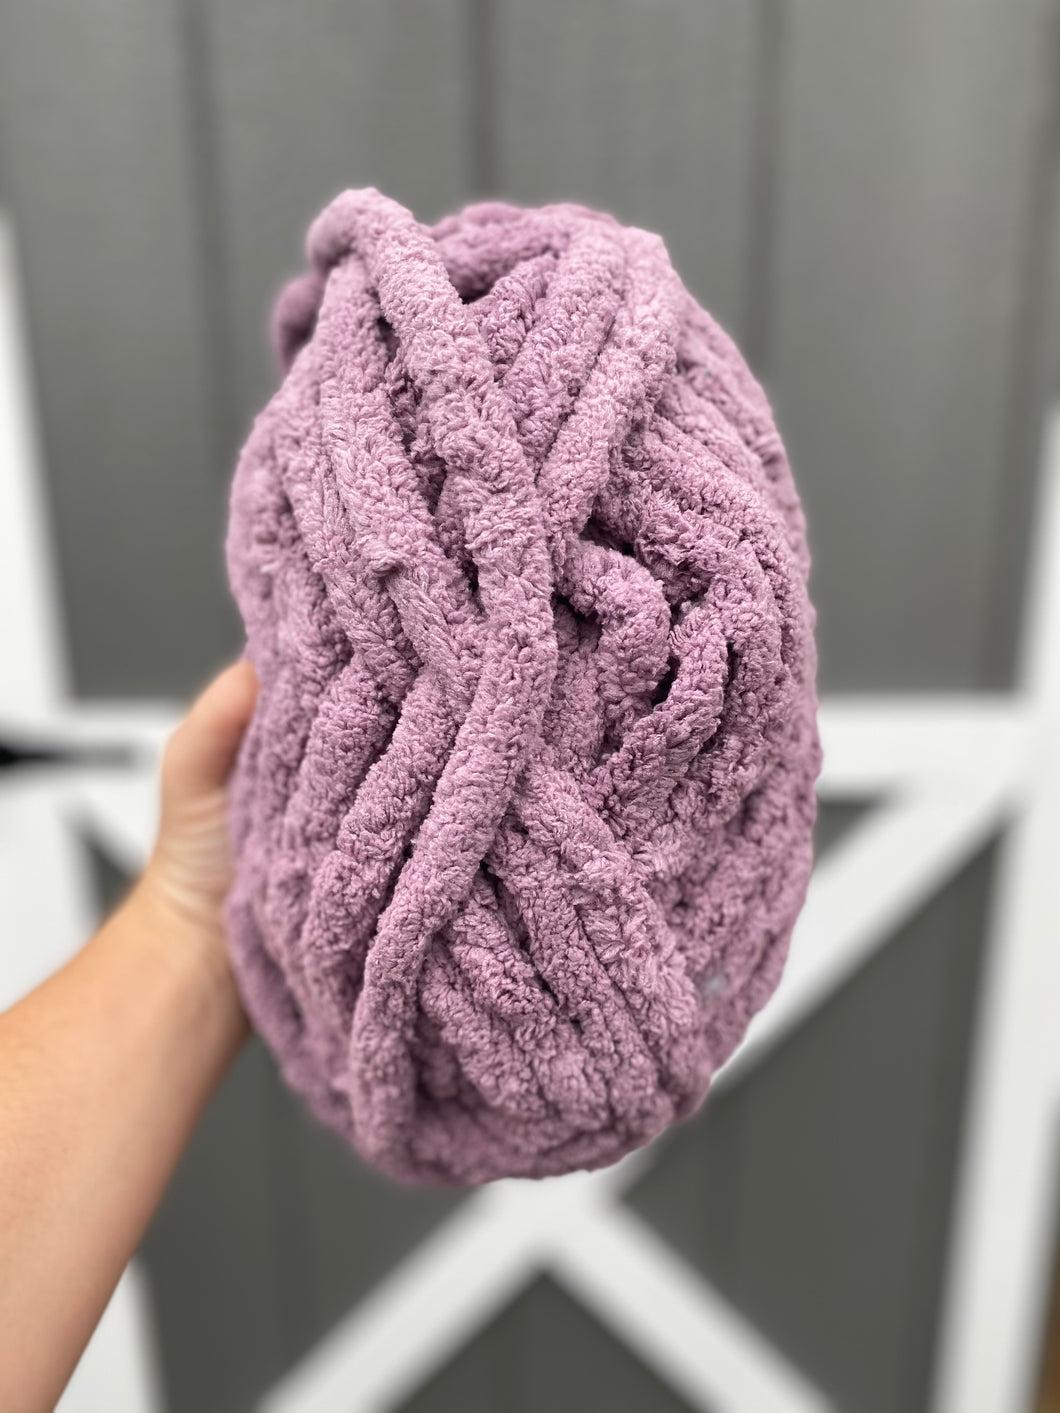 Chunky knit yarn